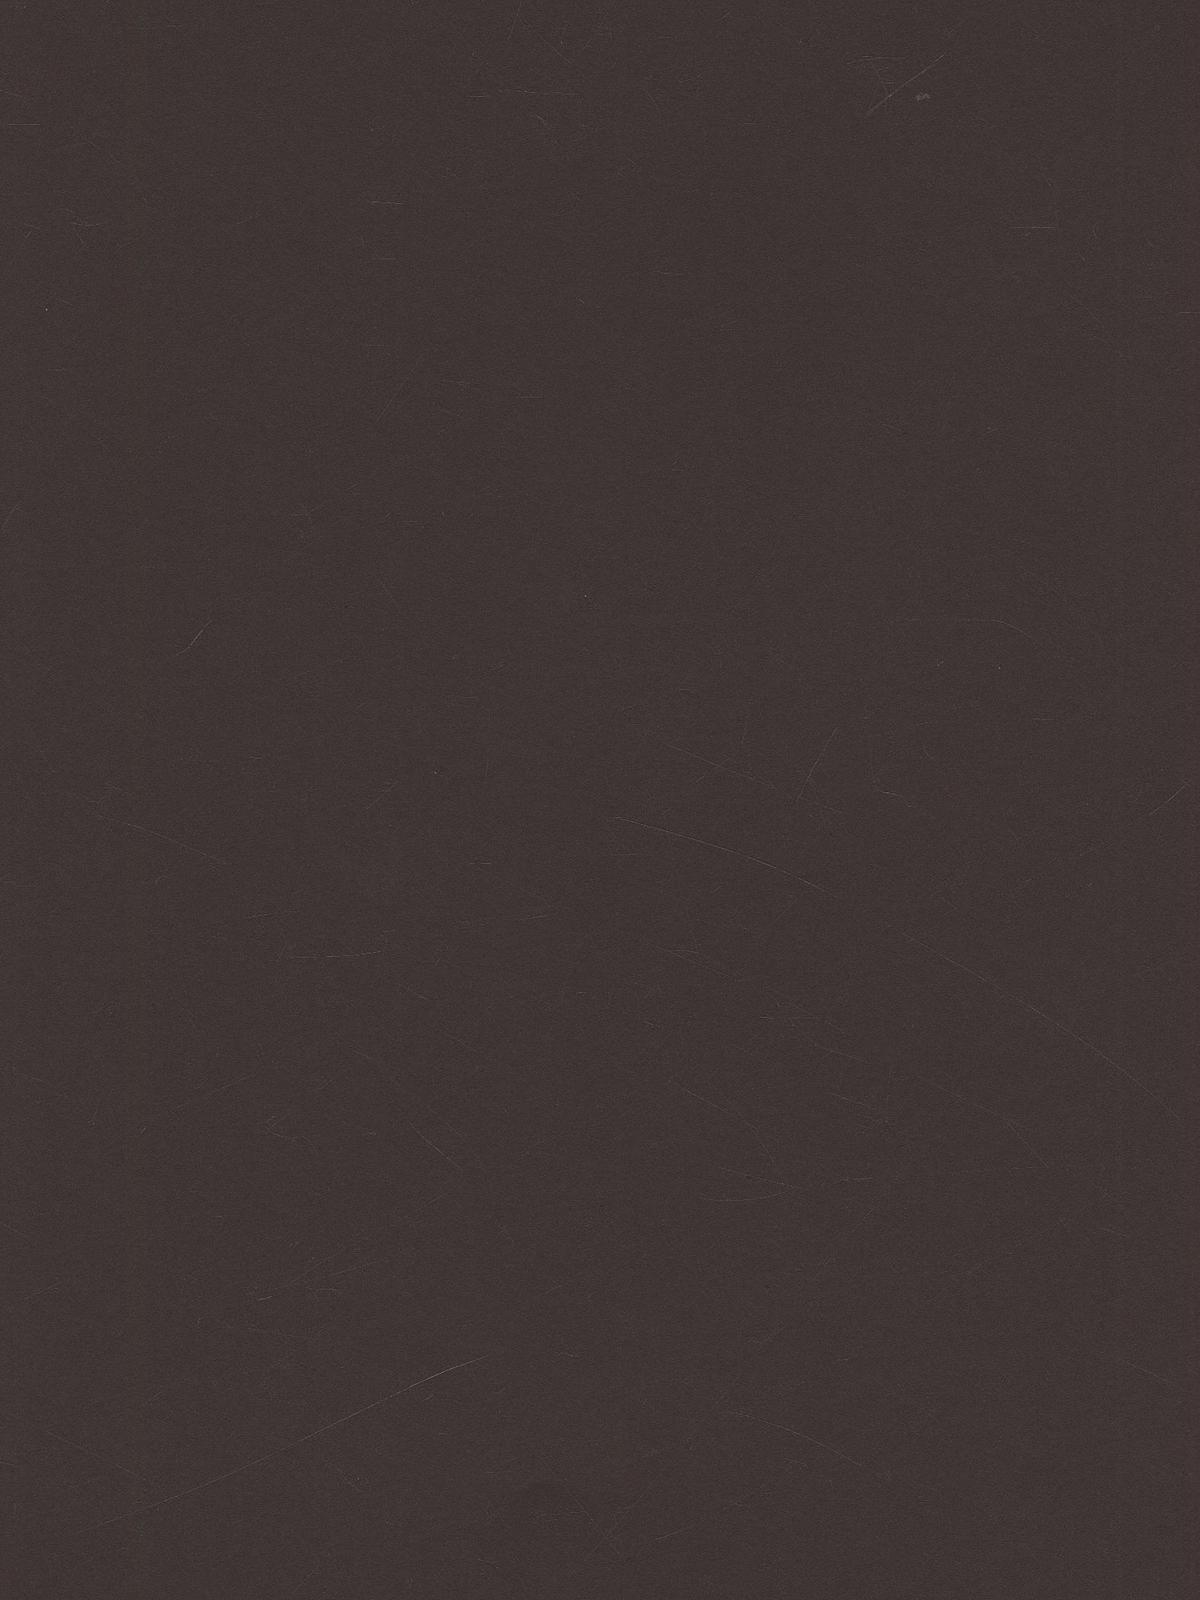 Art Paper Dark Brown 8.5 In. X 11 In.